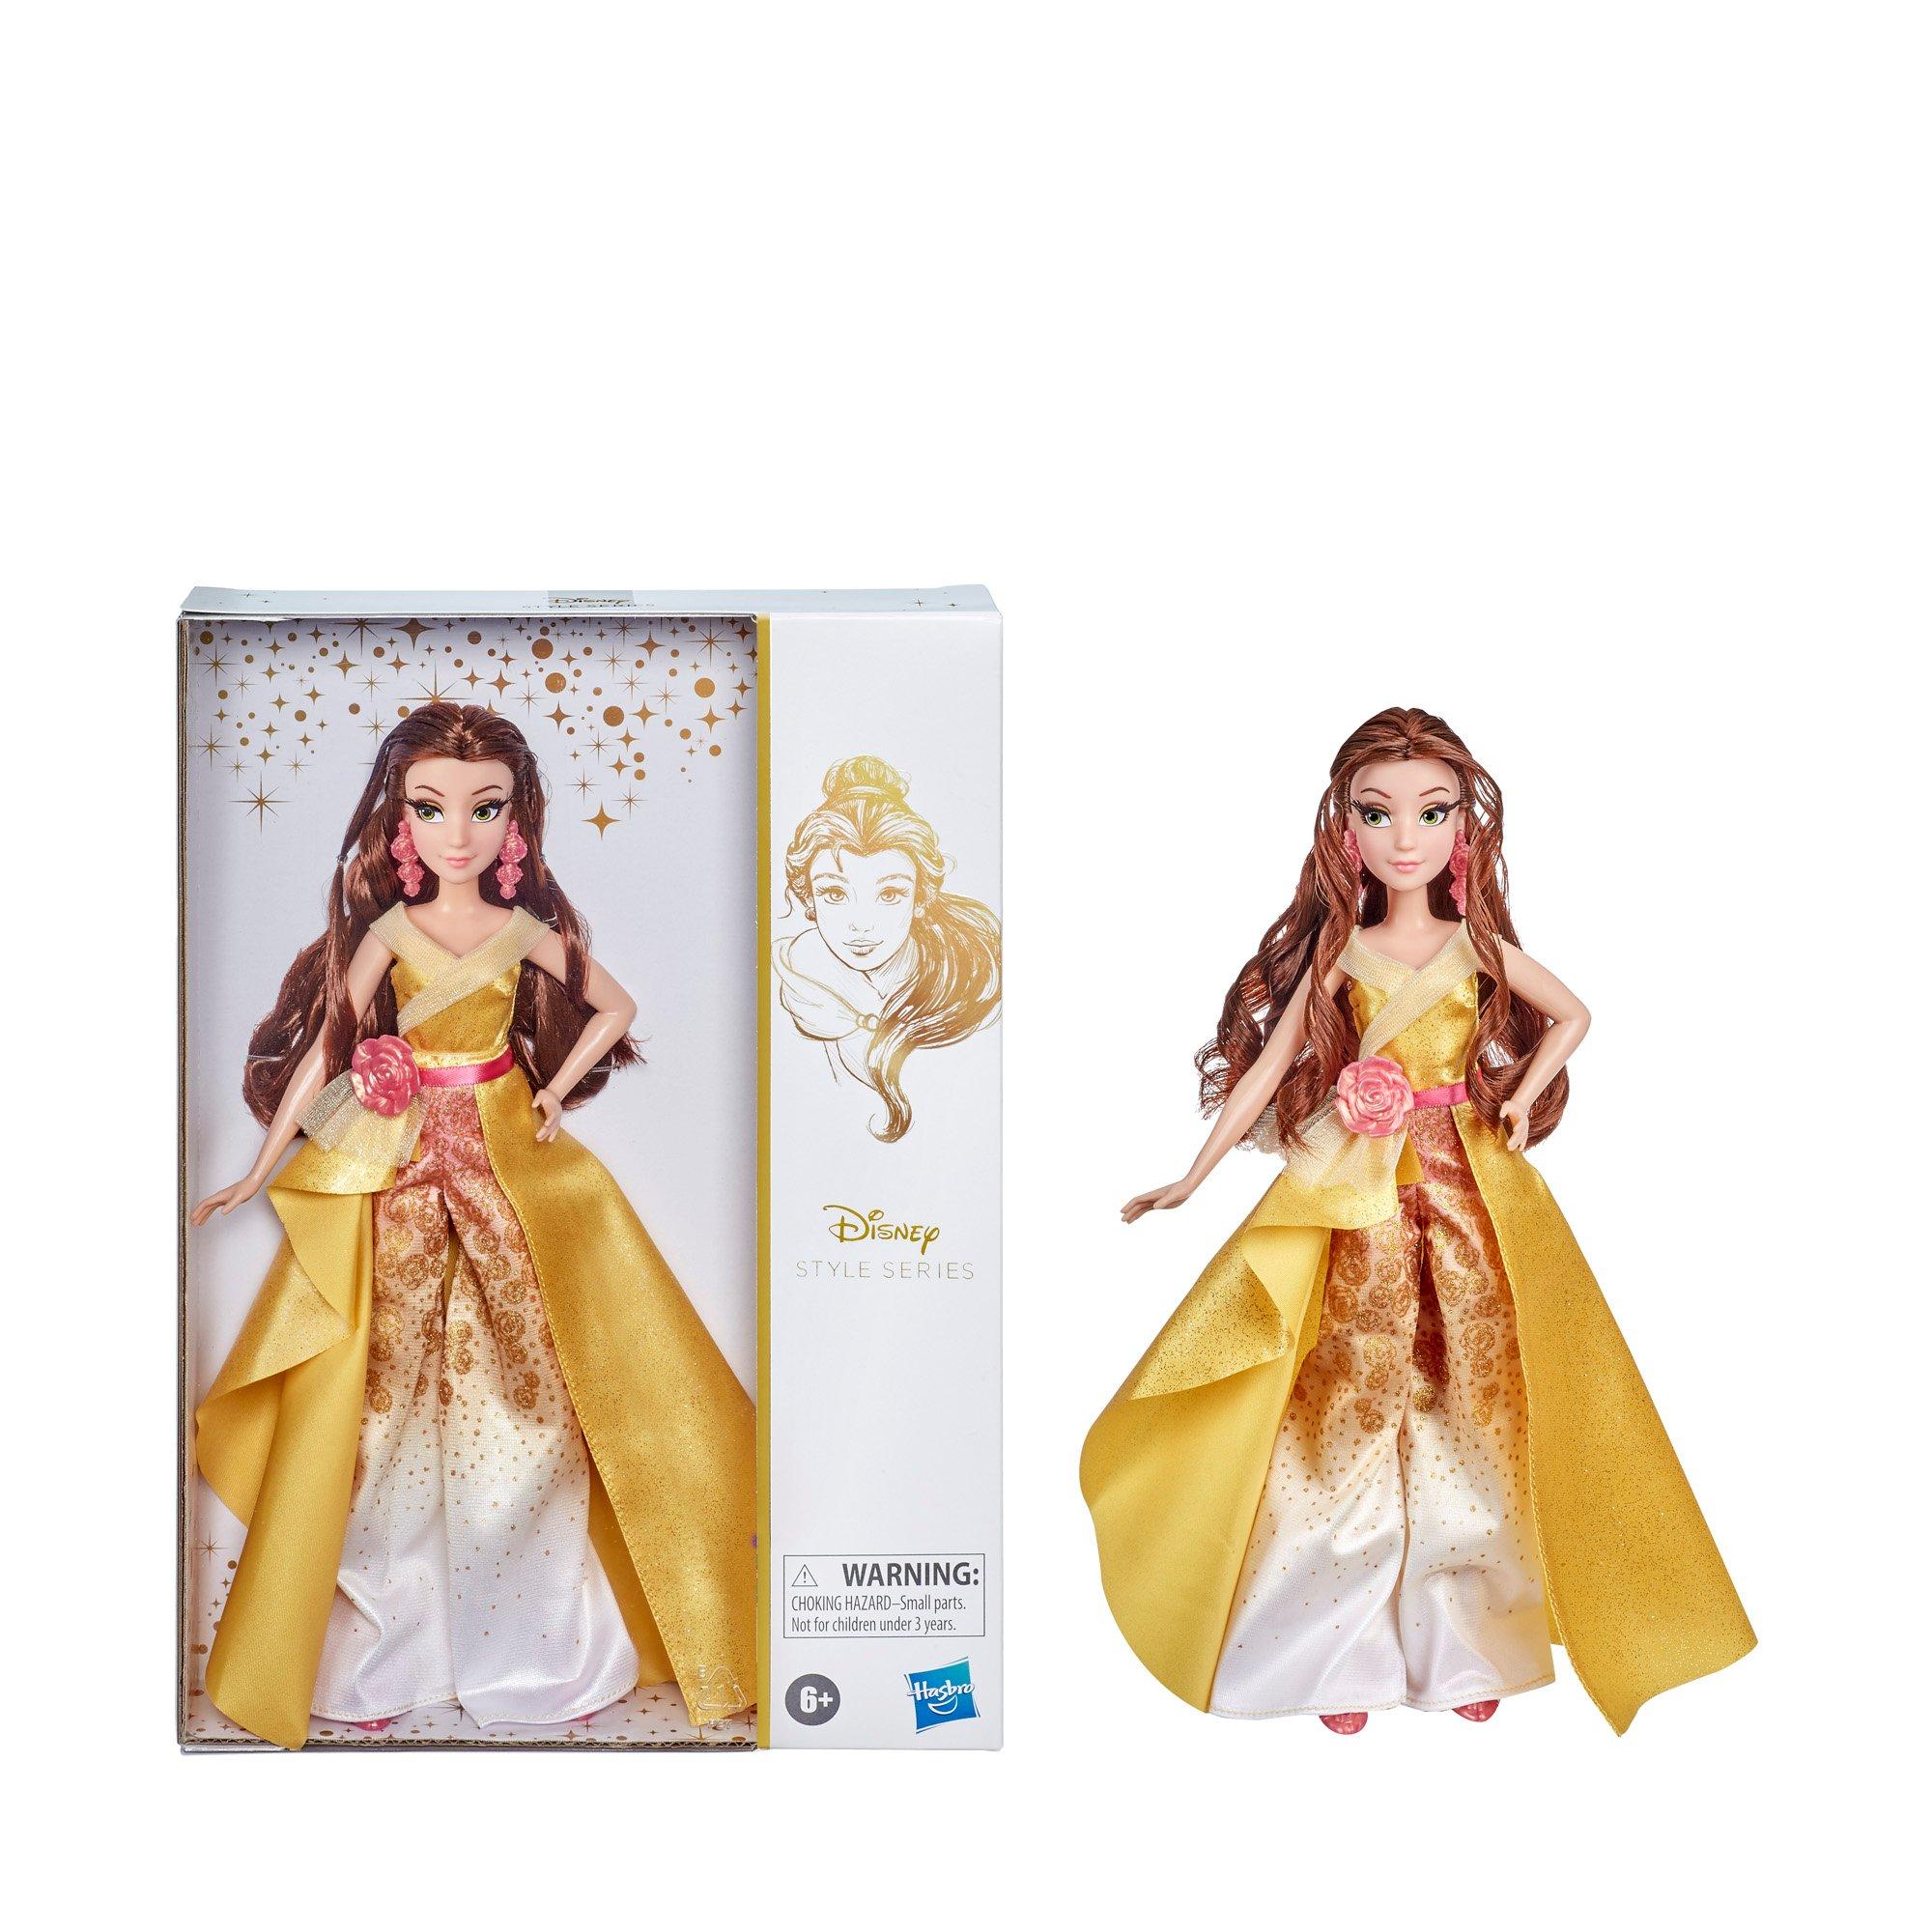 Hasbro  Disney Prinzessin Style Serie Belle 2 